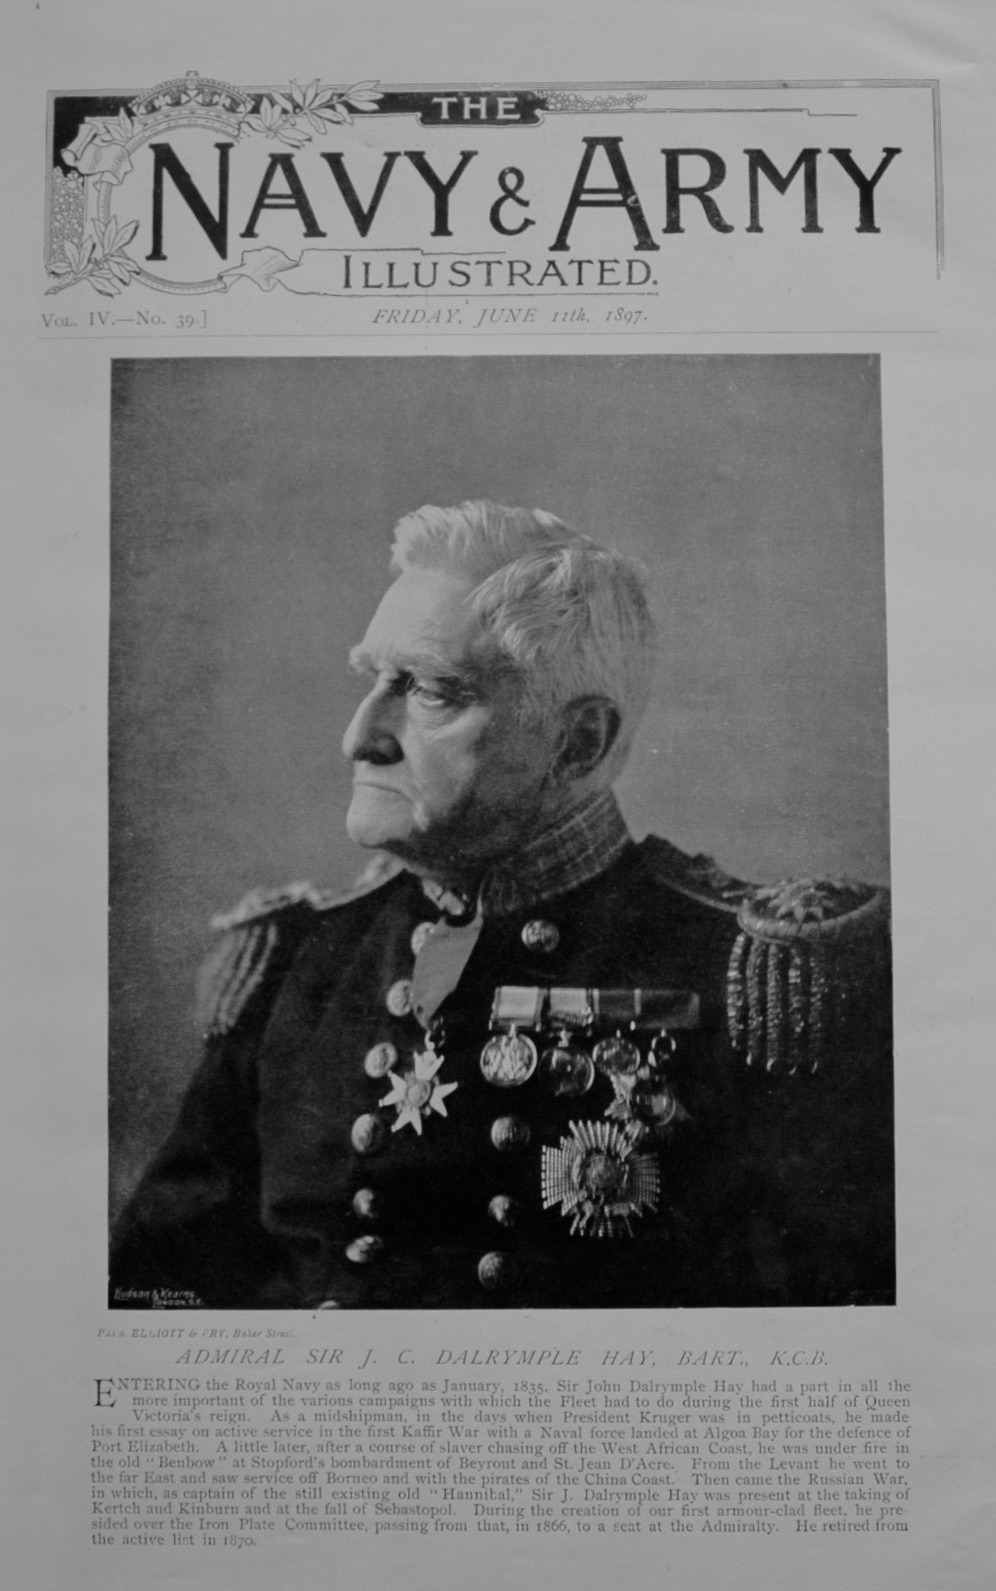 Admiral Sir J C Dalrymple Hay - 1897